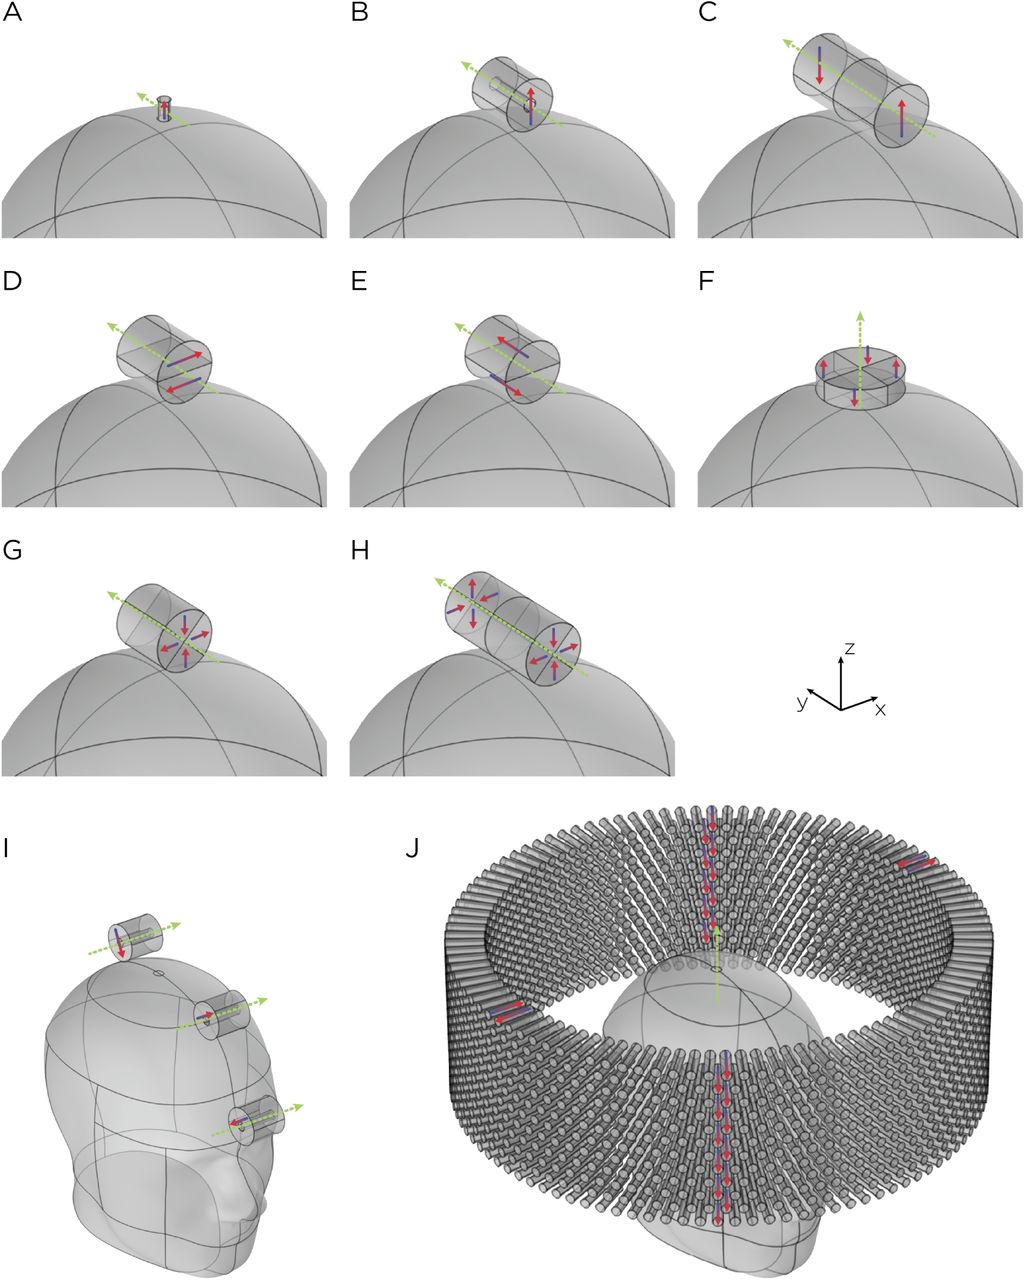 Electric field characteristics of rotating permanent magnet stimulation